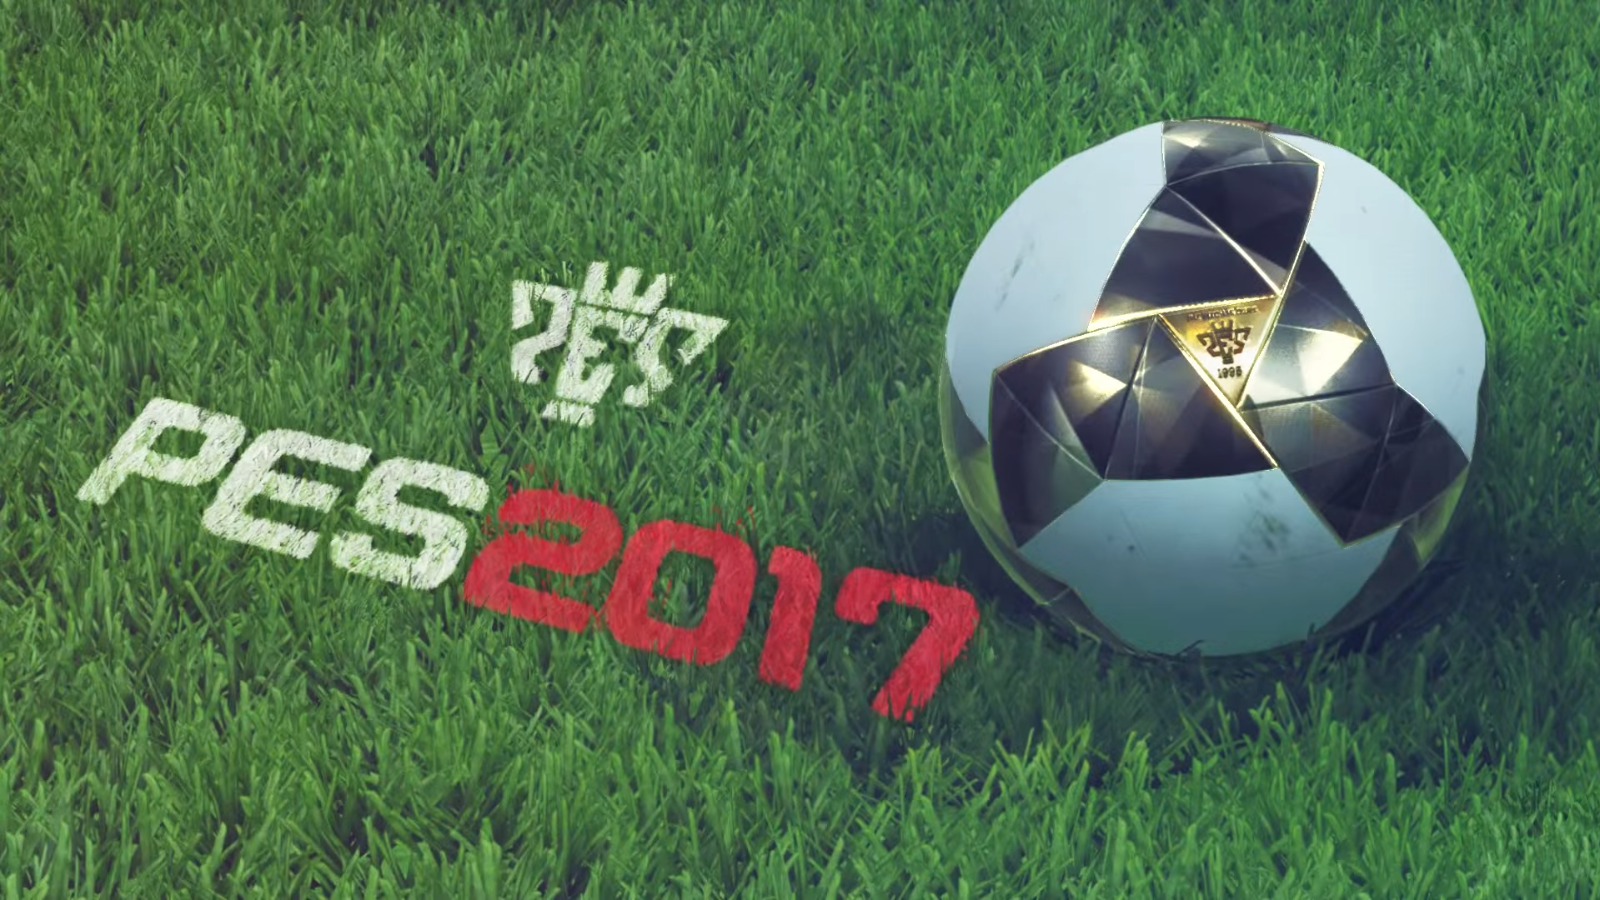 ANÁLISE: Pro Evolution Soccer 2017